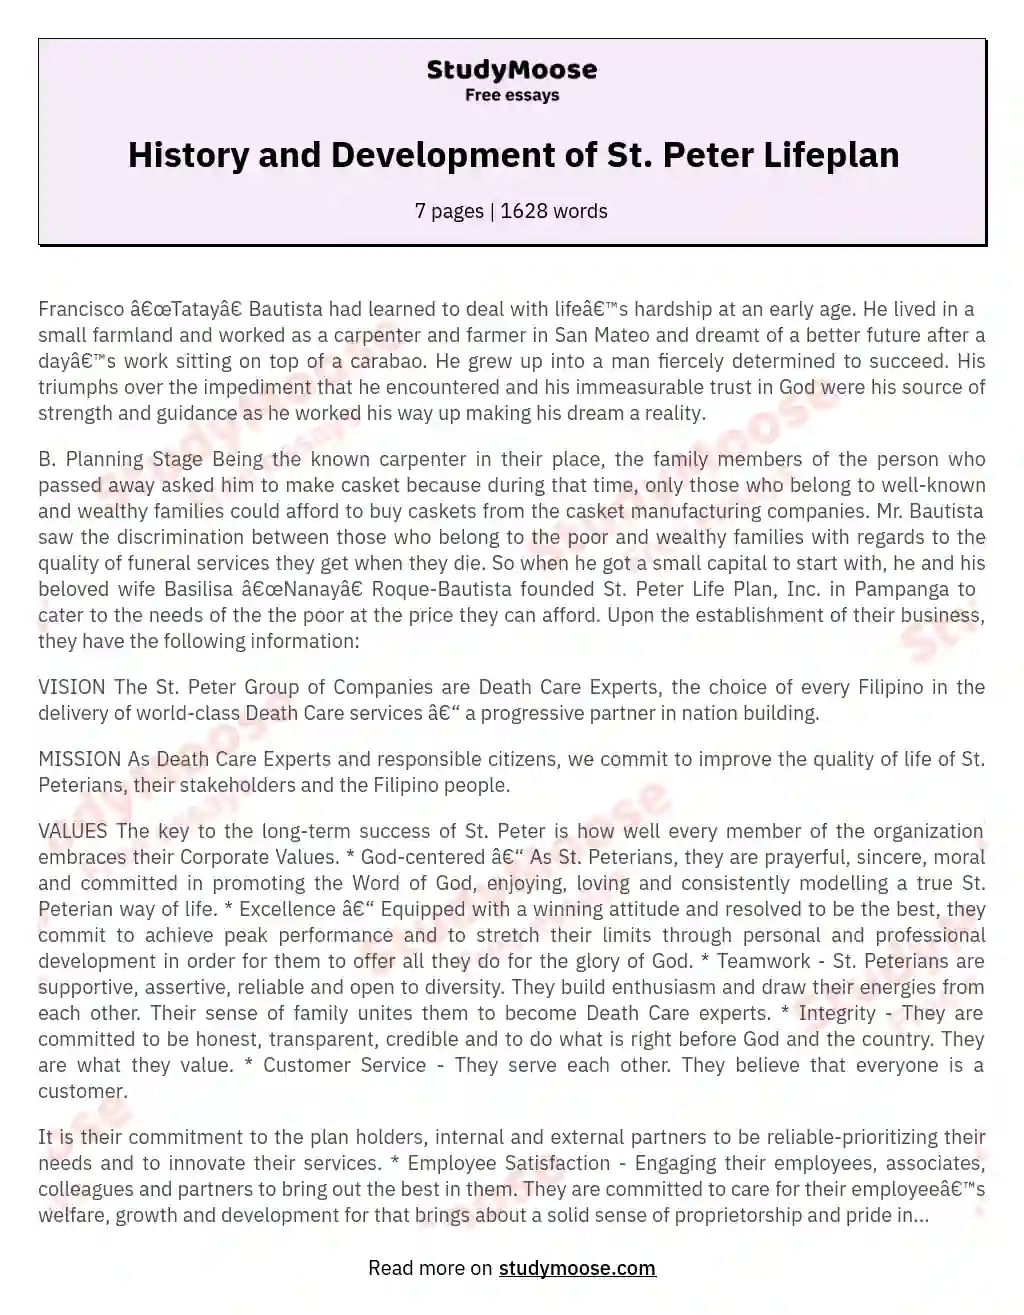 History and Development of St. Peter Lifeplan essay